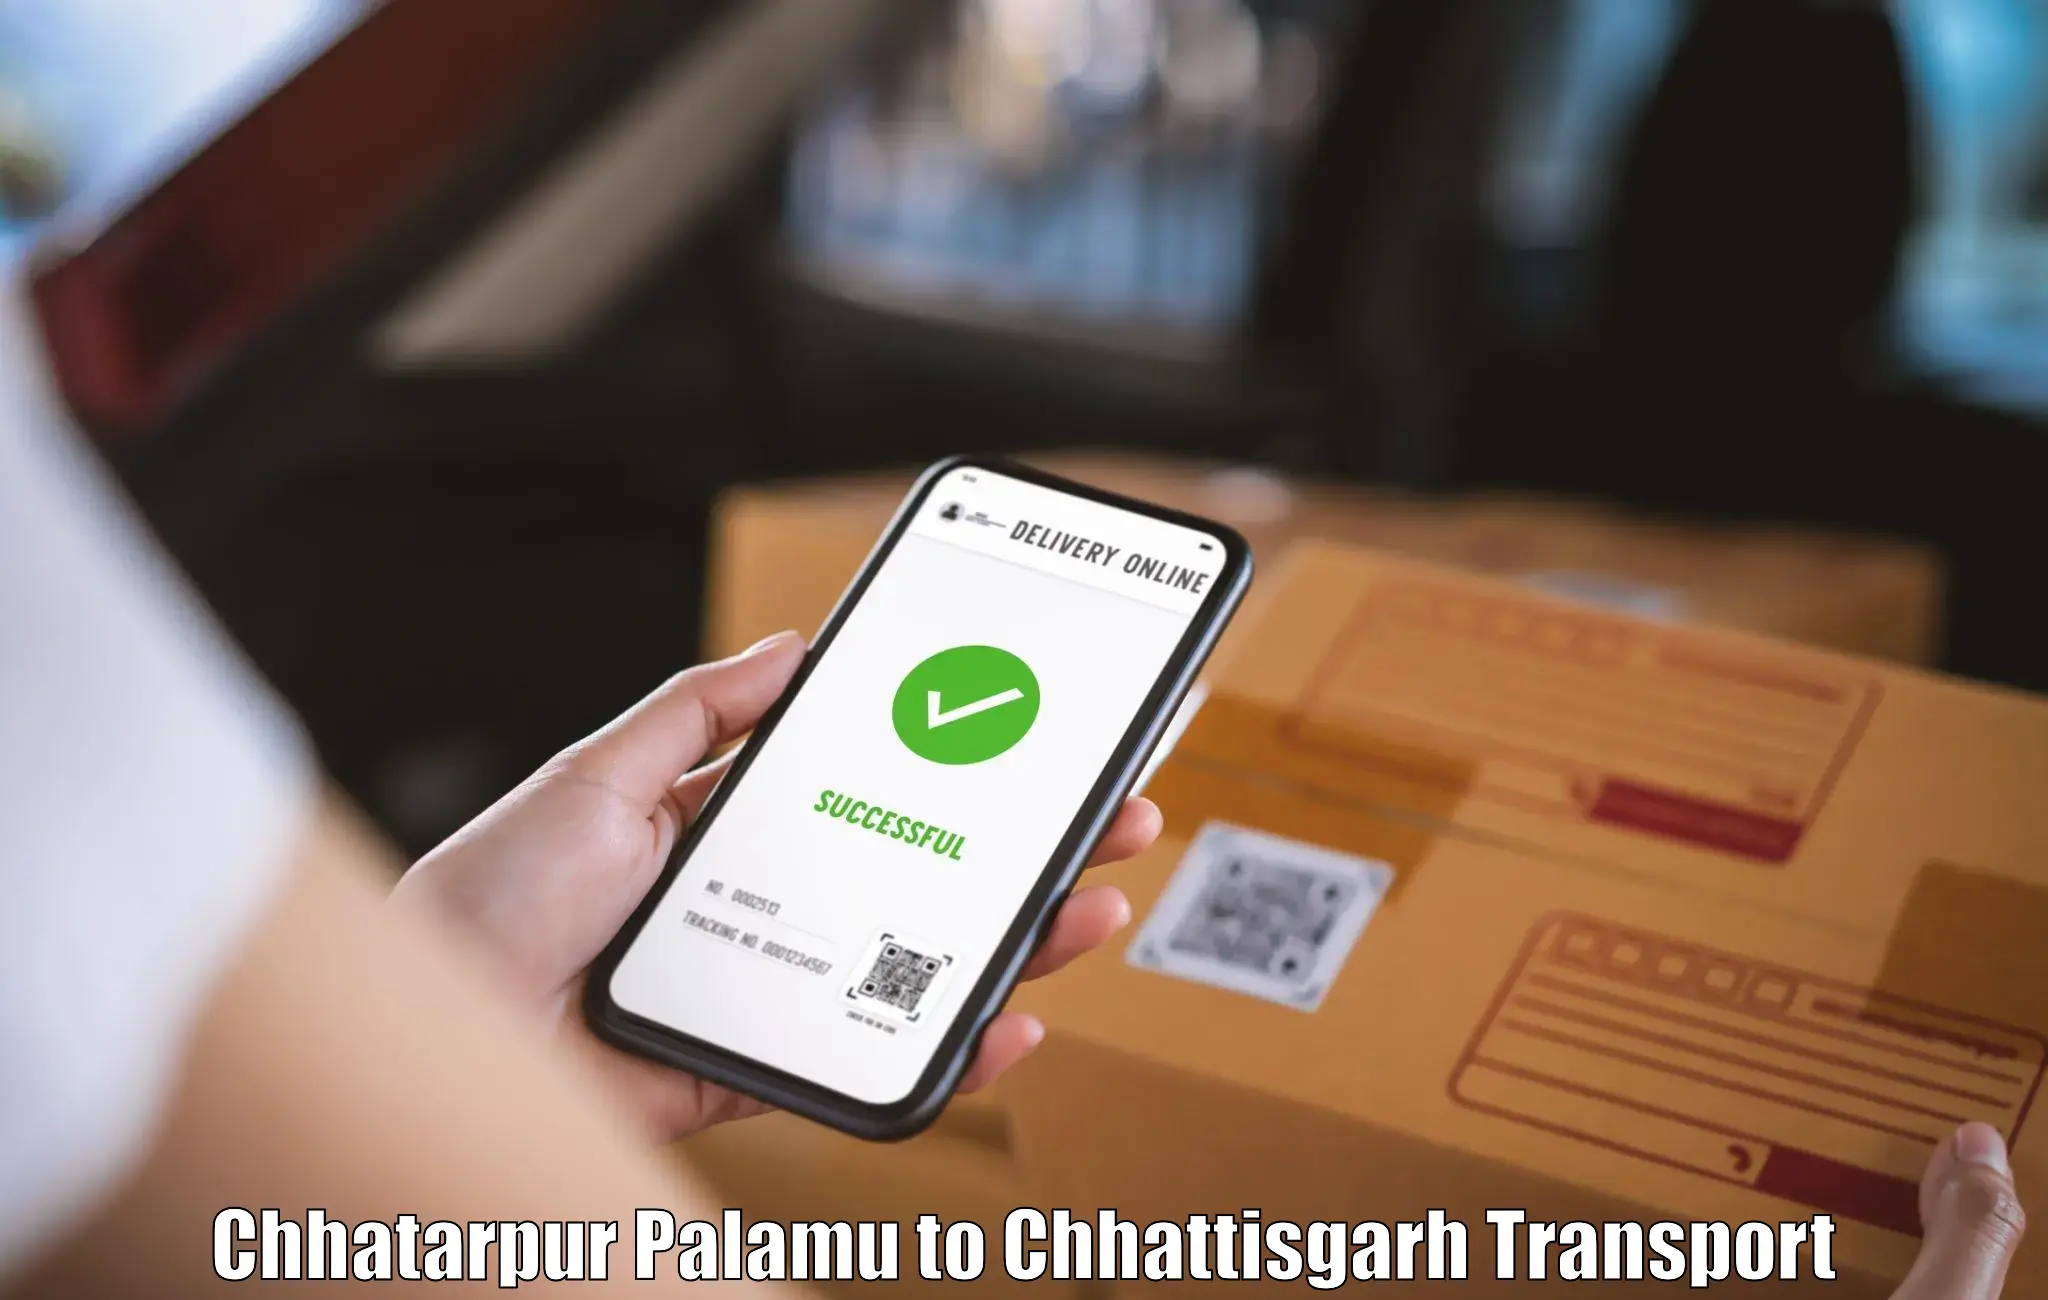 Shipping services in Chhatarpur Palamu to Pandariya